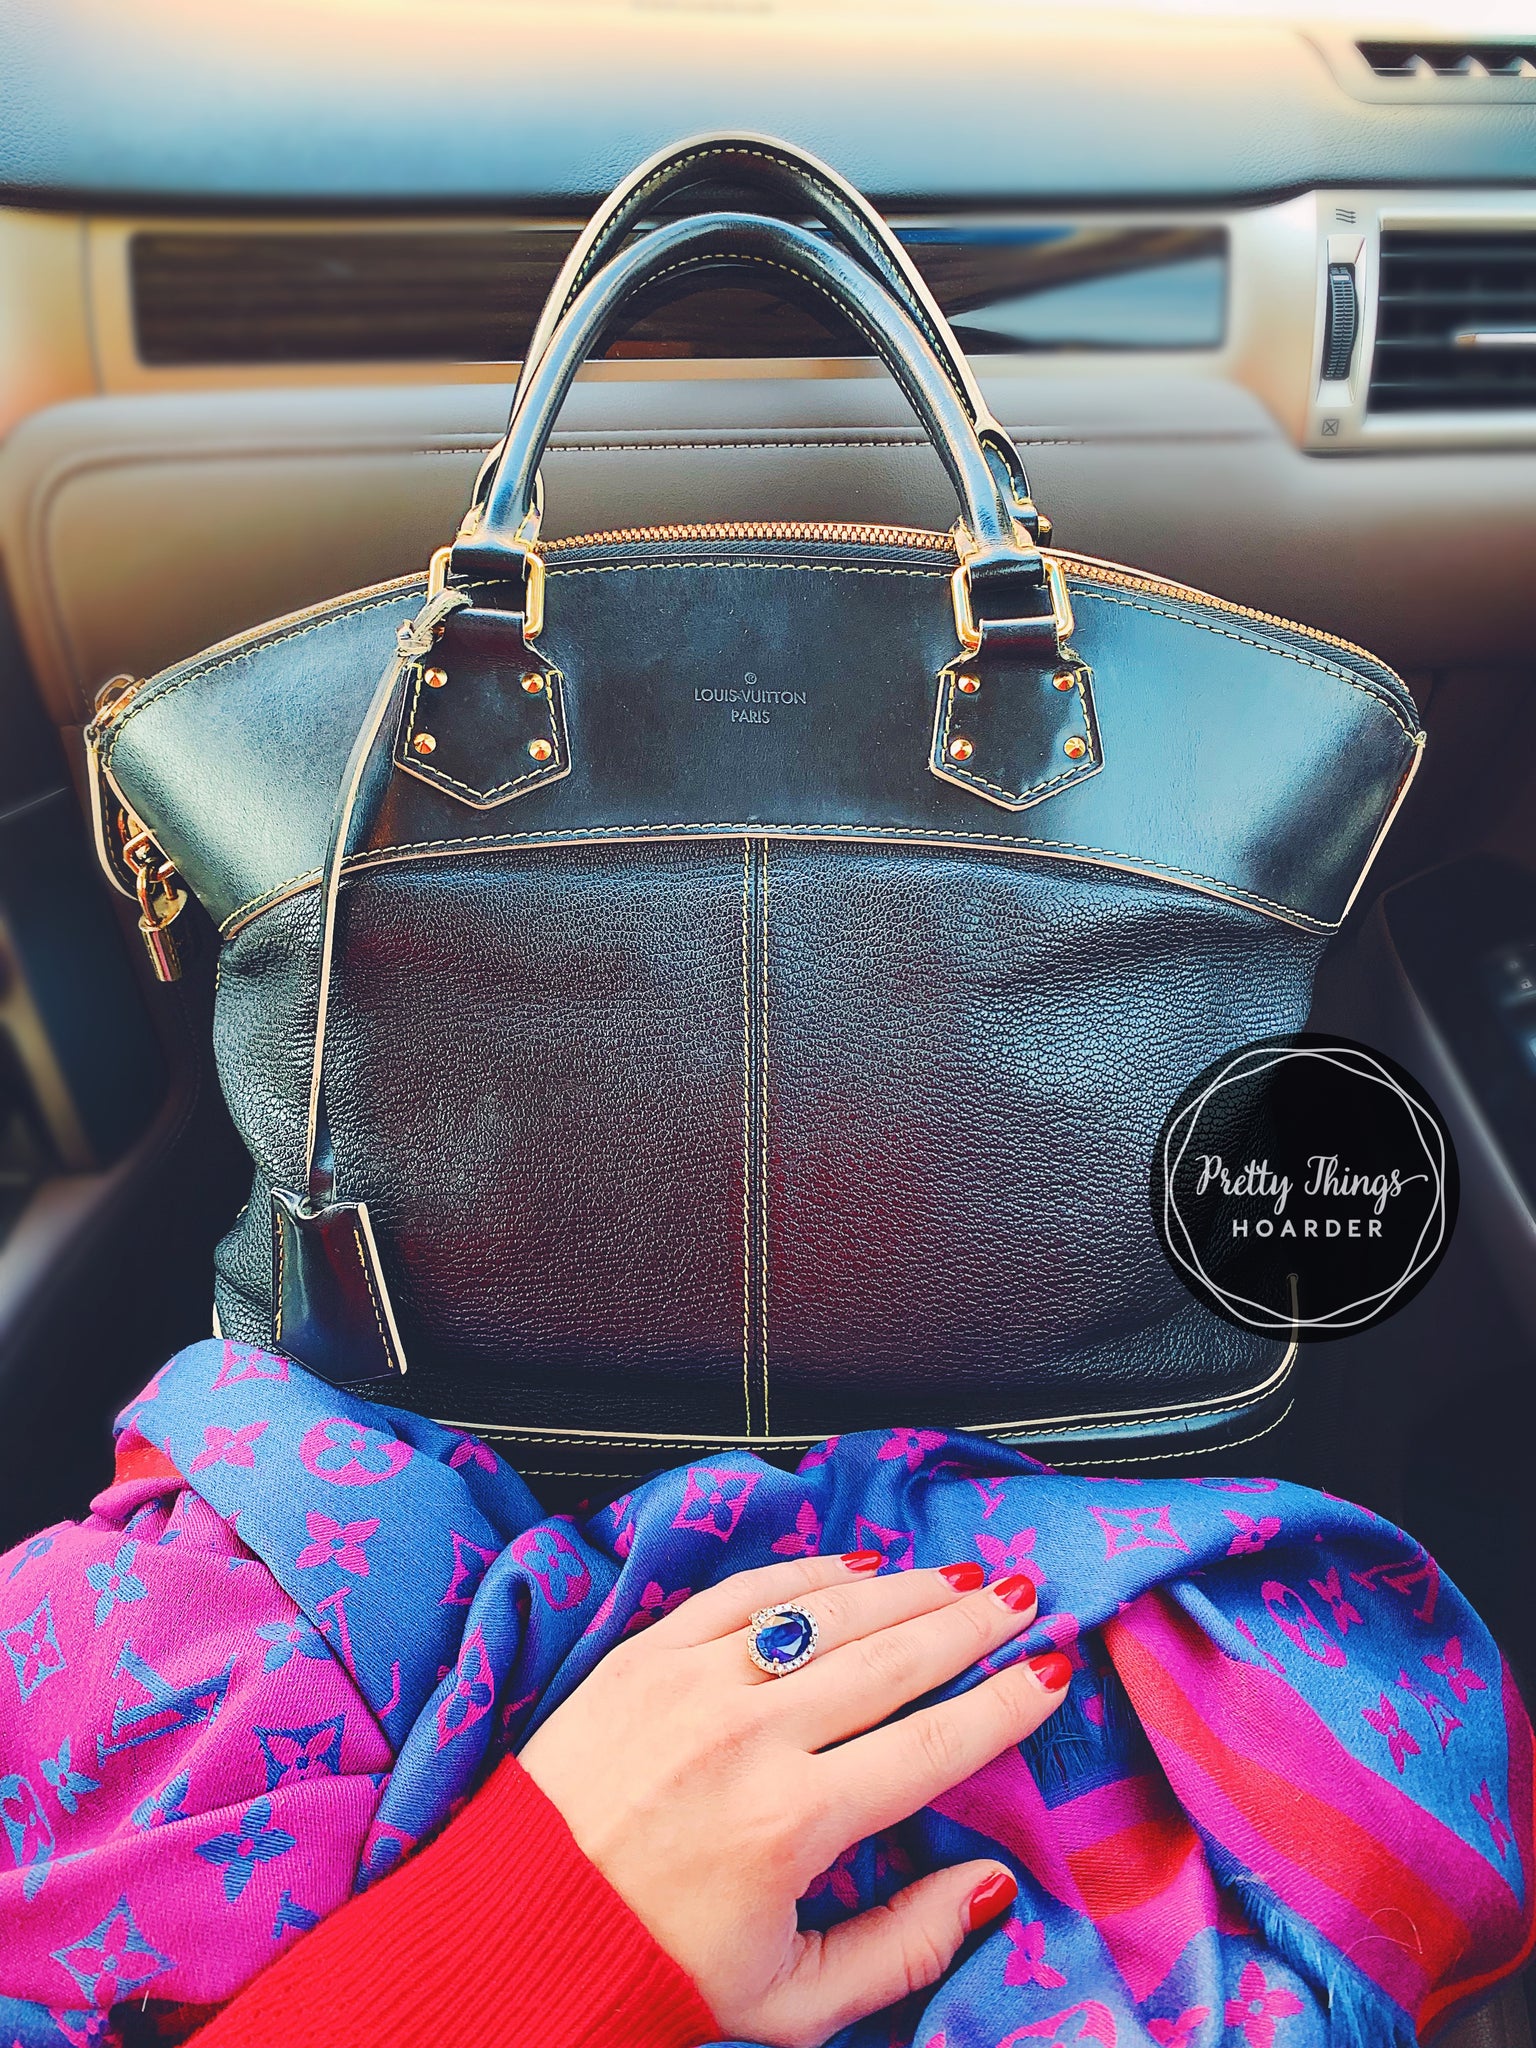 Louis Vuitton Suhali Lockit Handbag Black leather